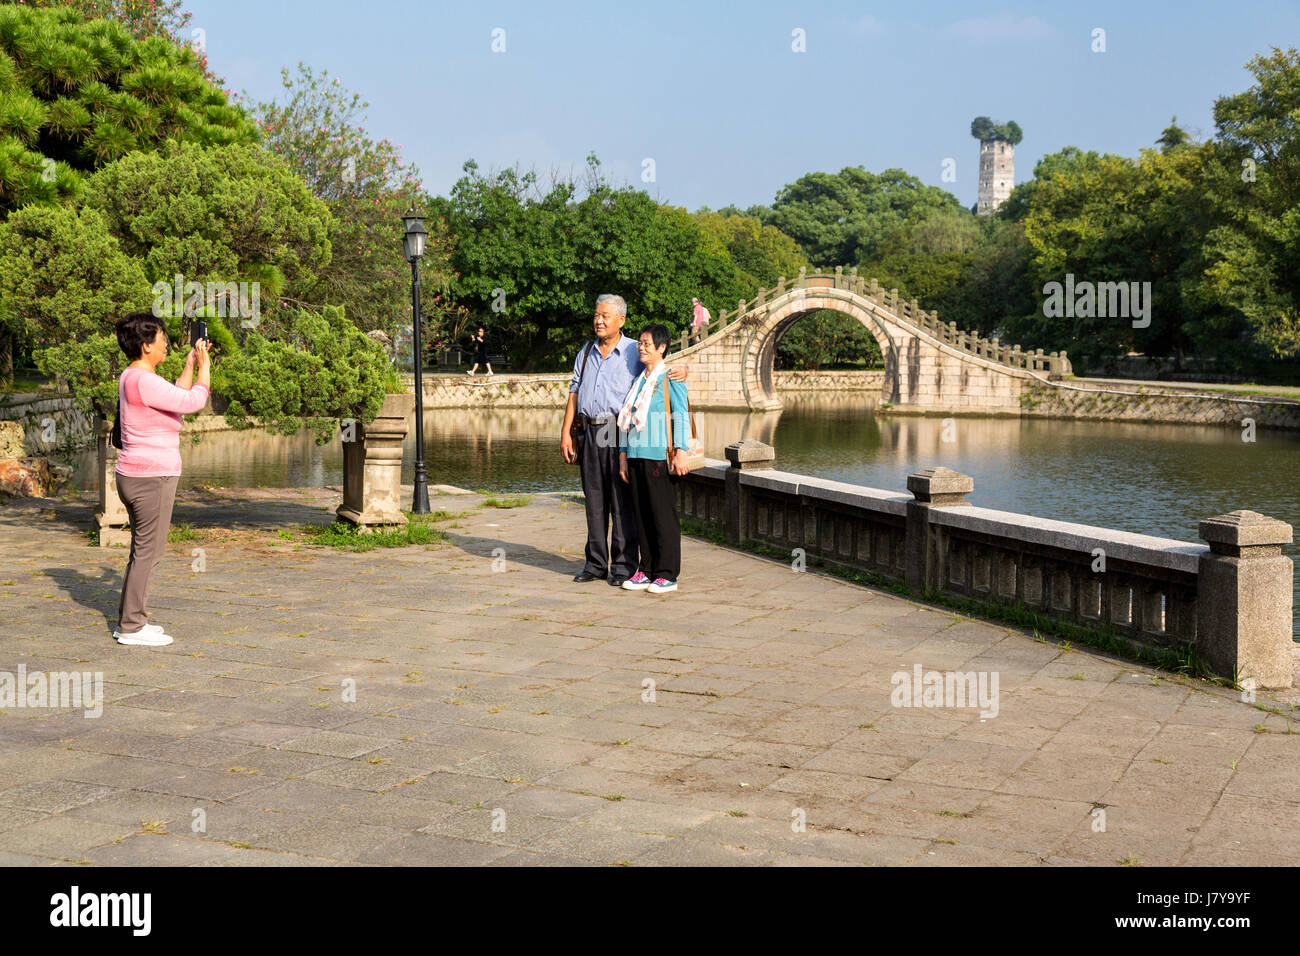 Wenzhou, Zhejiang, Cina. Jiangxin isola. Di mezza età matura che è fotografata davanti al Ponte della Luna. Oriente Pagoda in background, ricostruita 11 Foto Stock